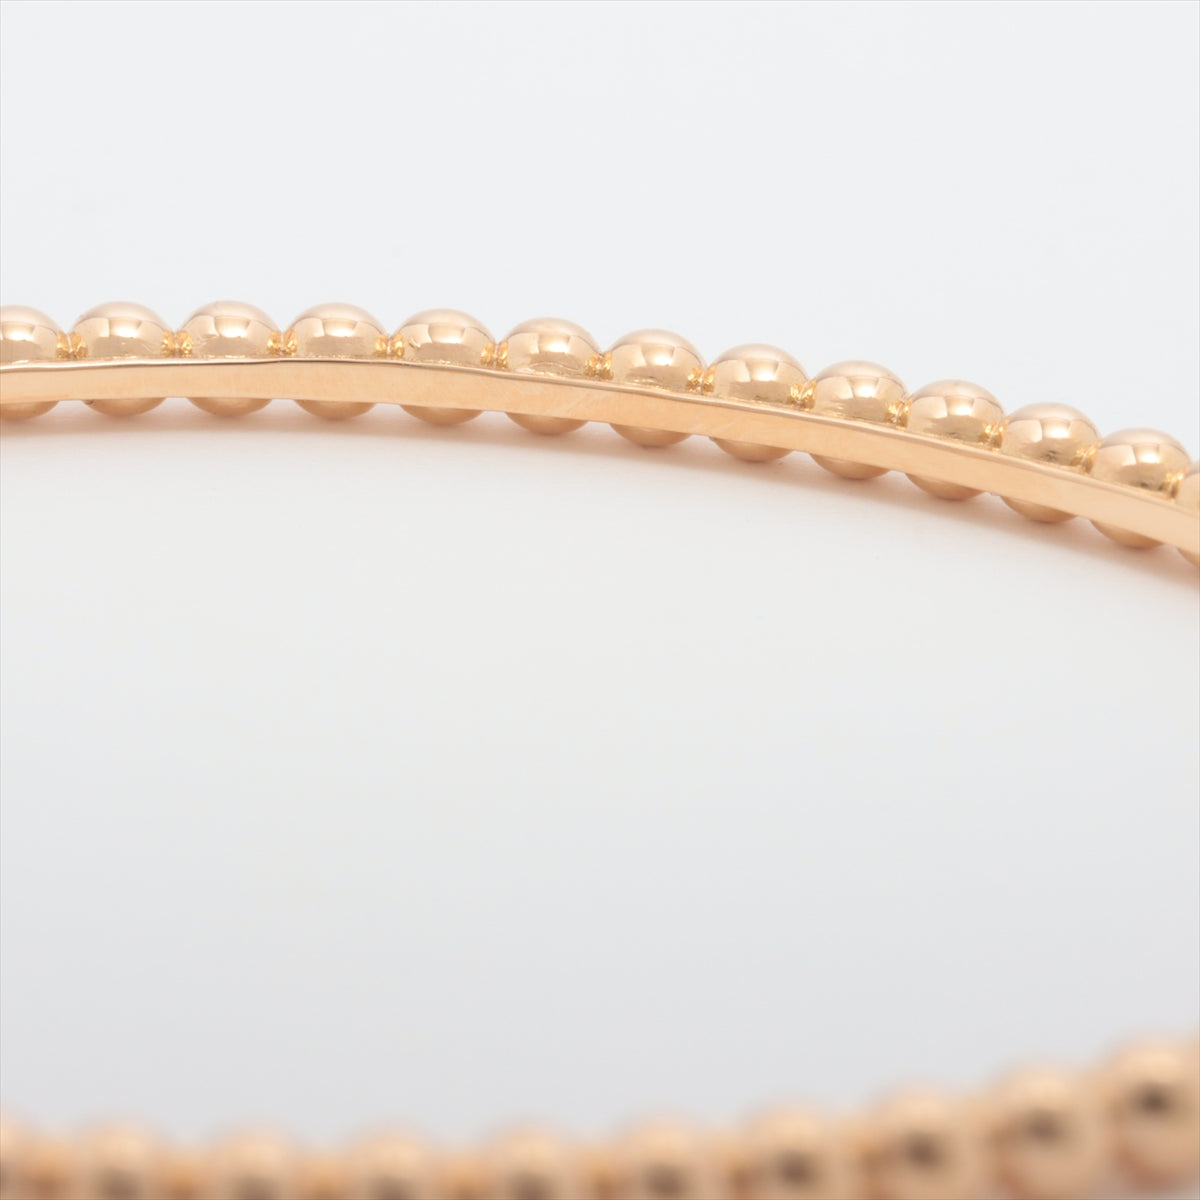 Van Cleef &amp; Arpels Perle Golden Pearl Bracelet 750 (PG) 21.6g L VCARO95800